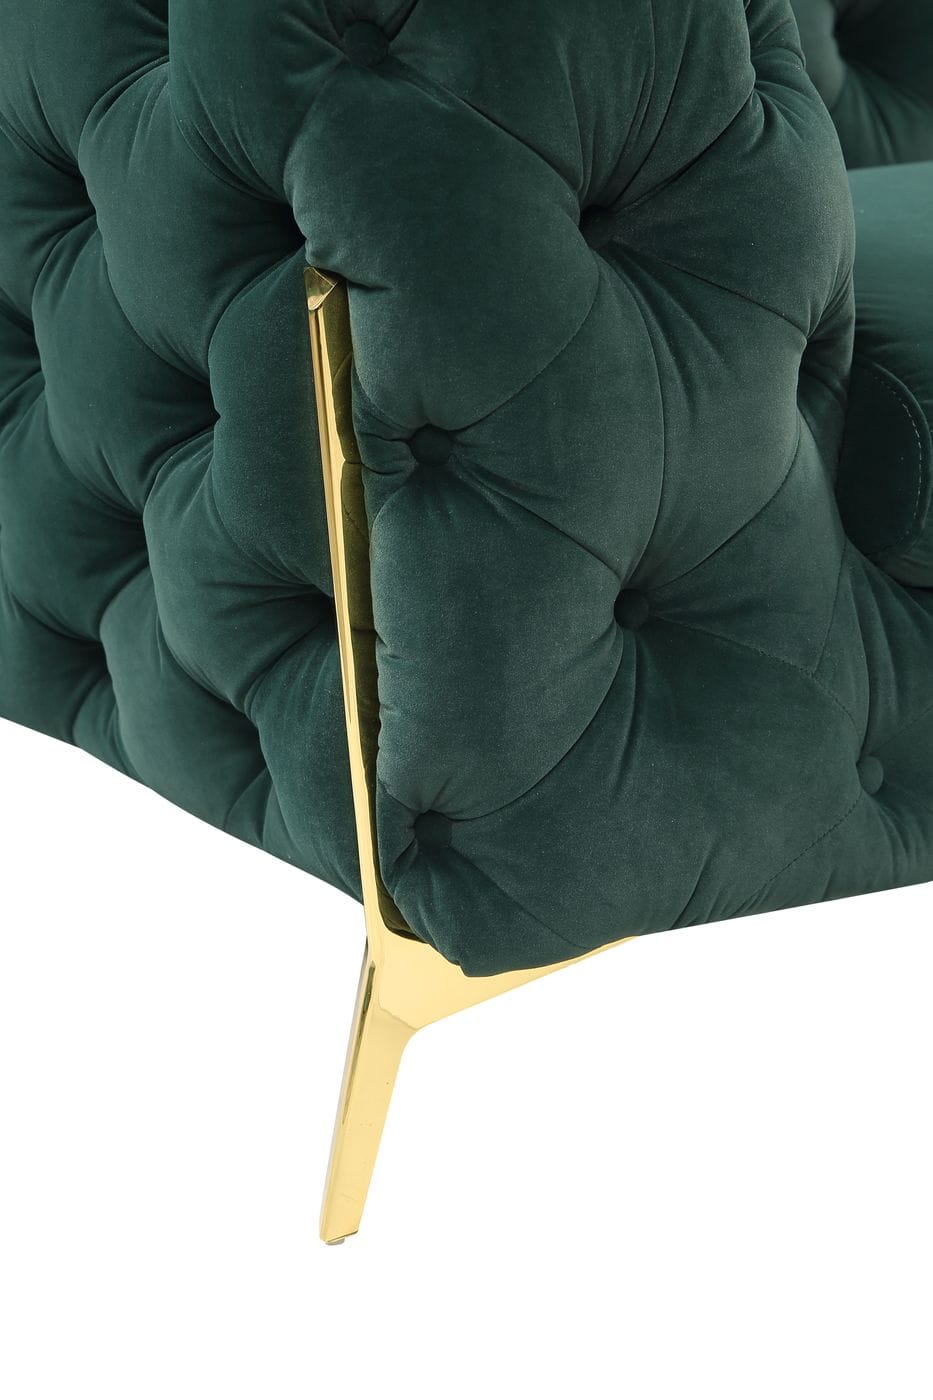 VIG Furniture Divani Casa Sheila Emerald Green Fabric Chair